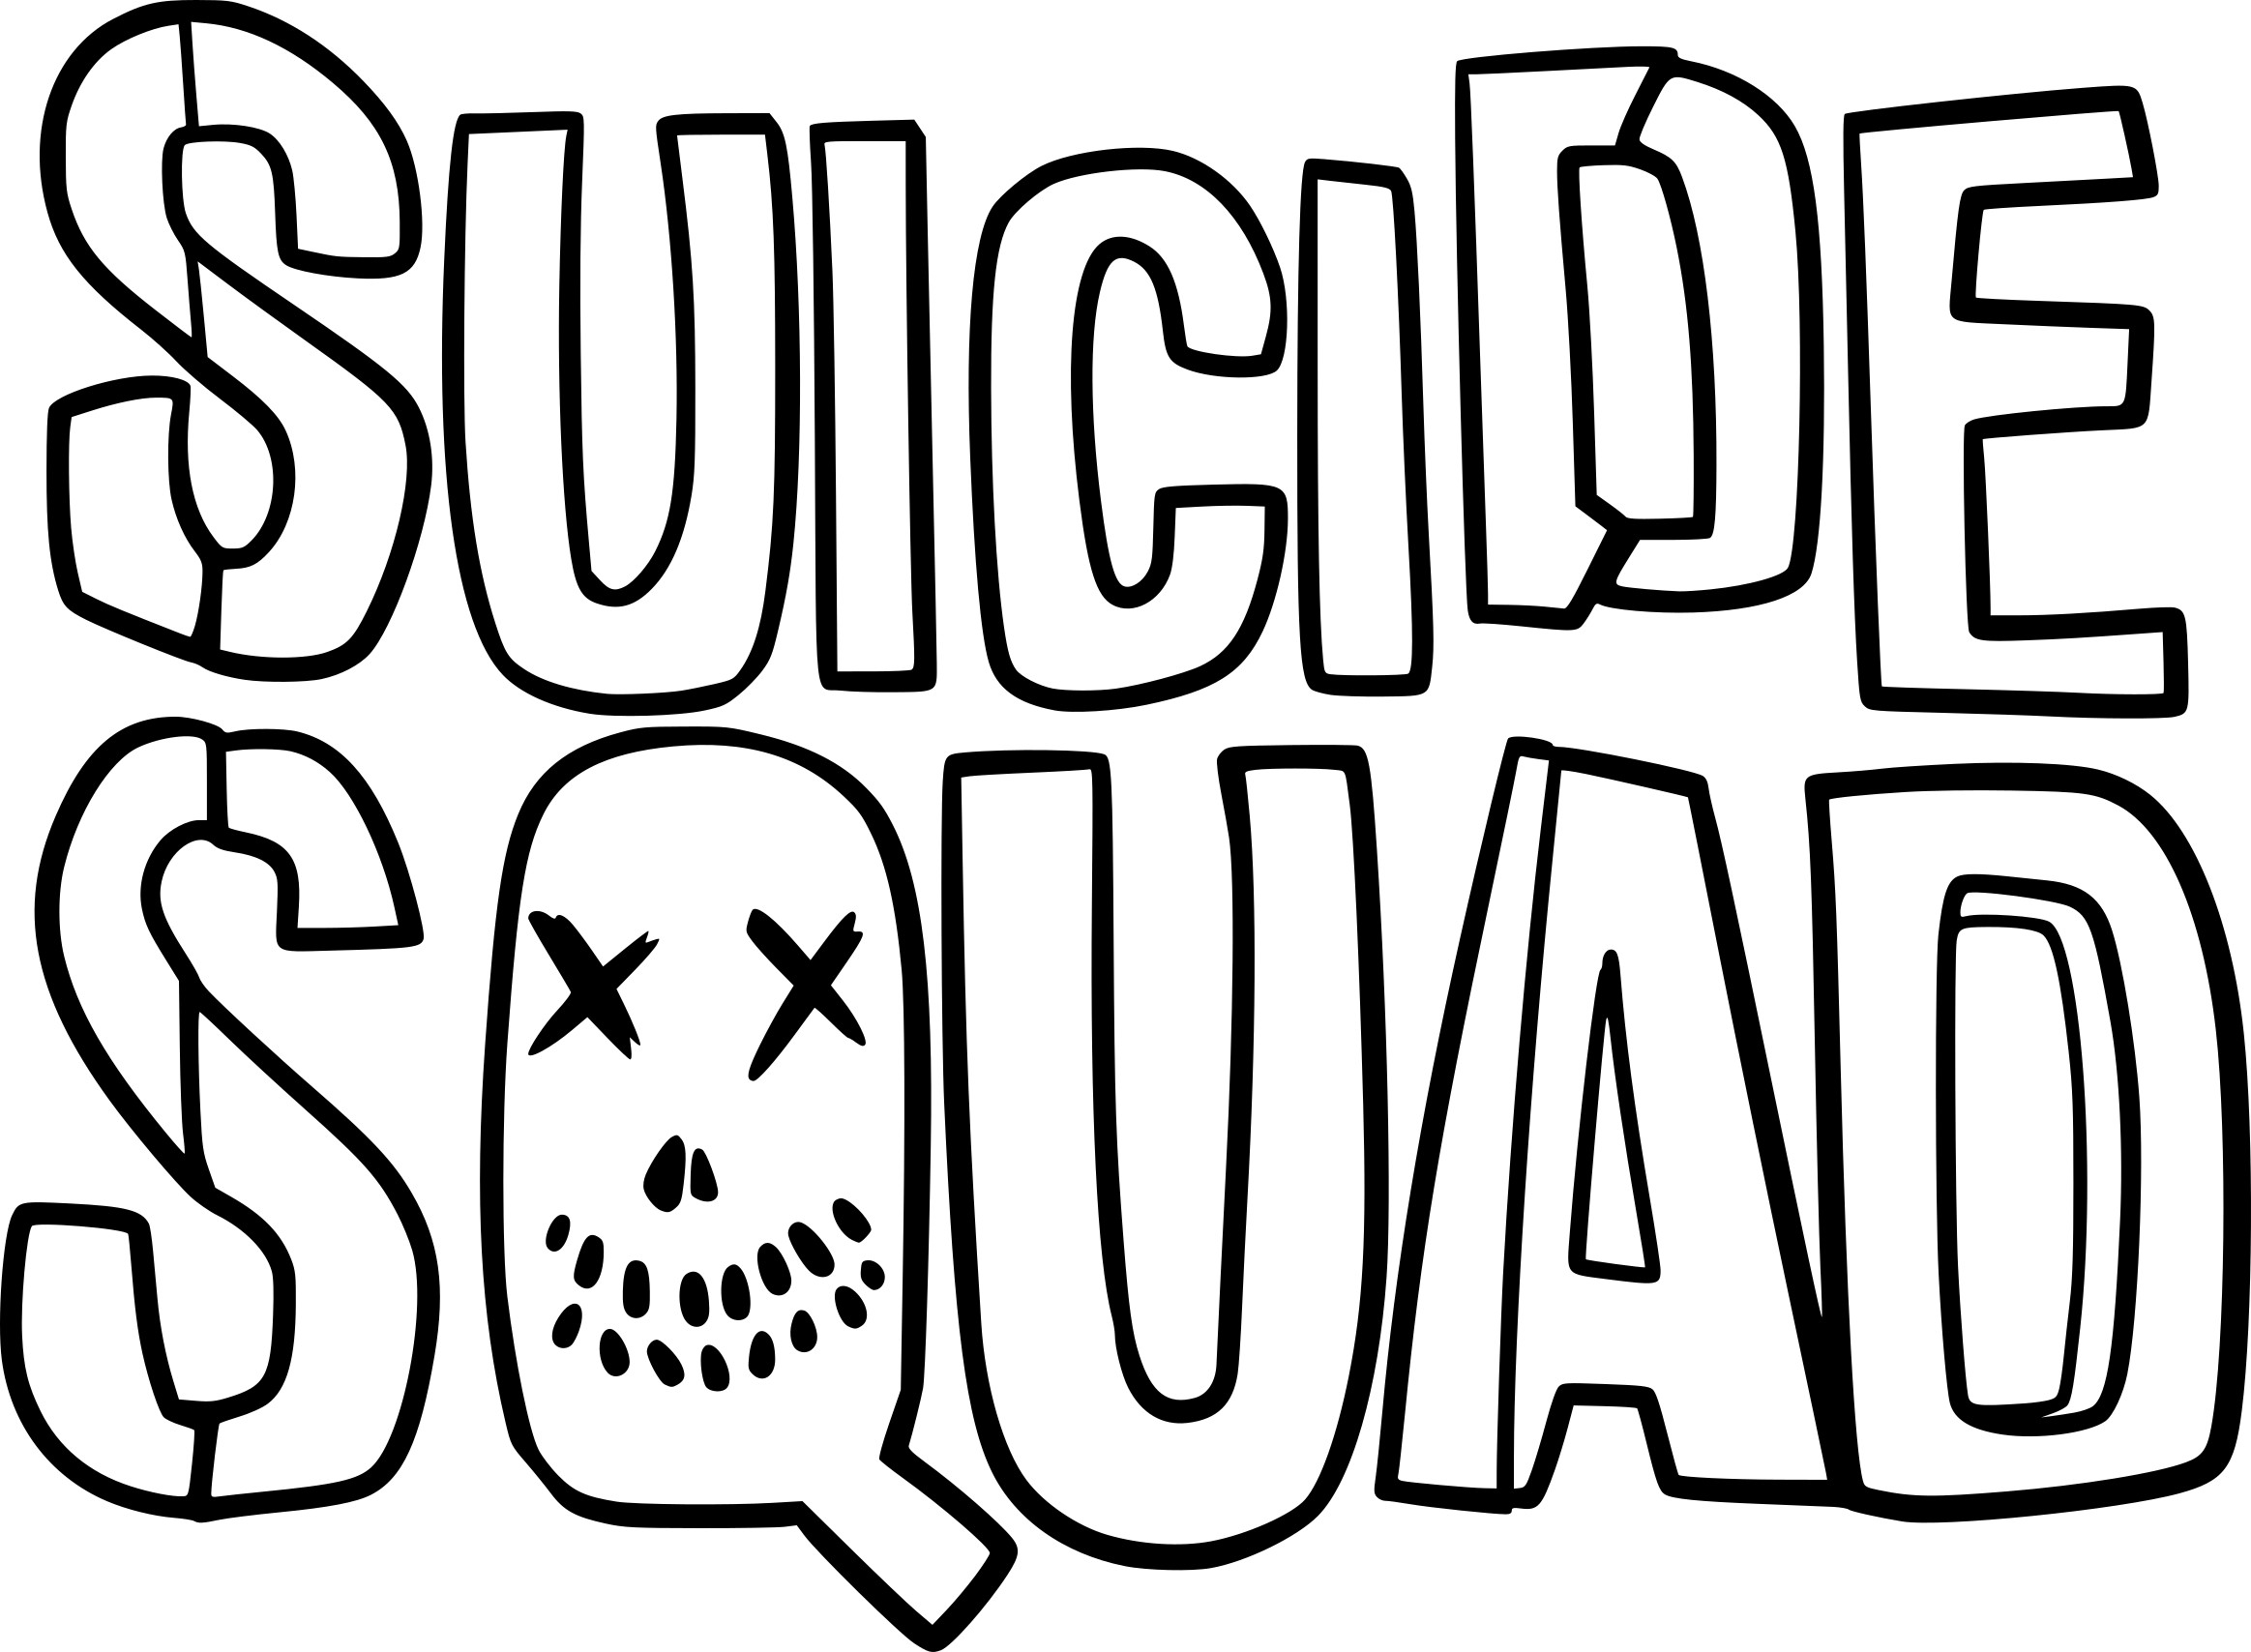 Suicide Squad coloring page